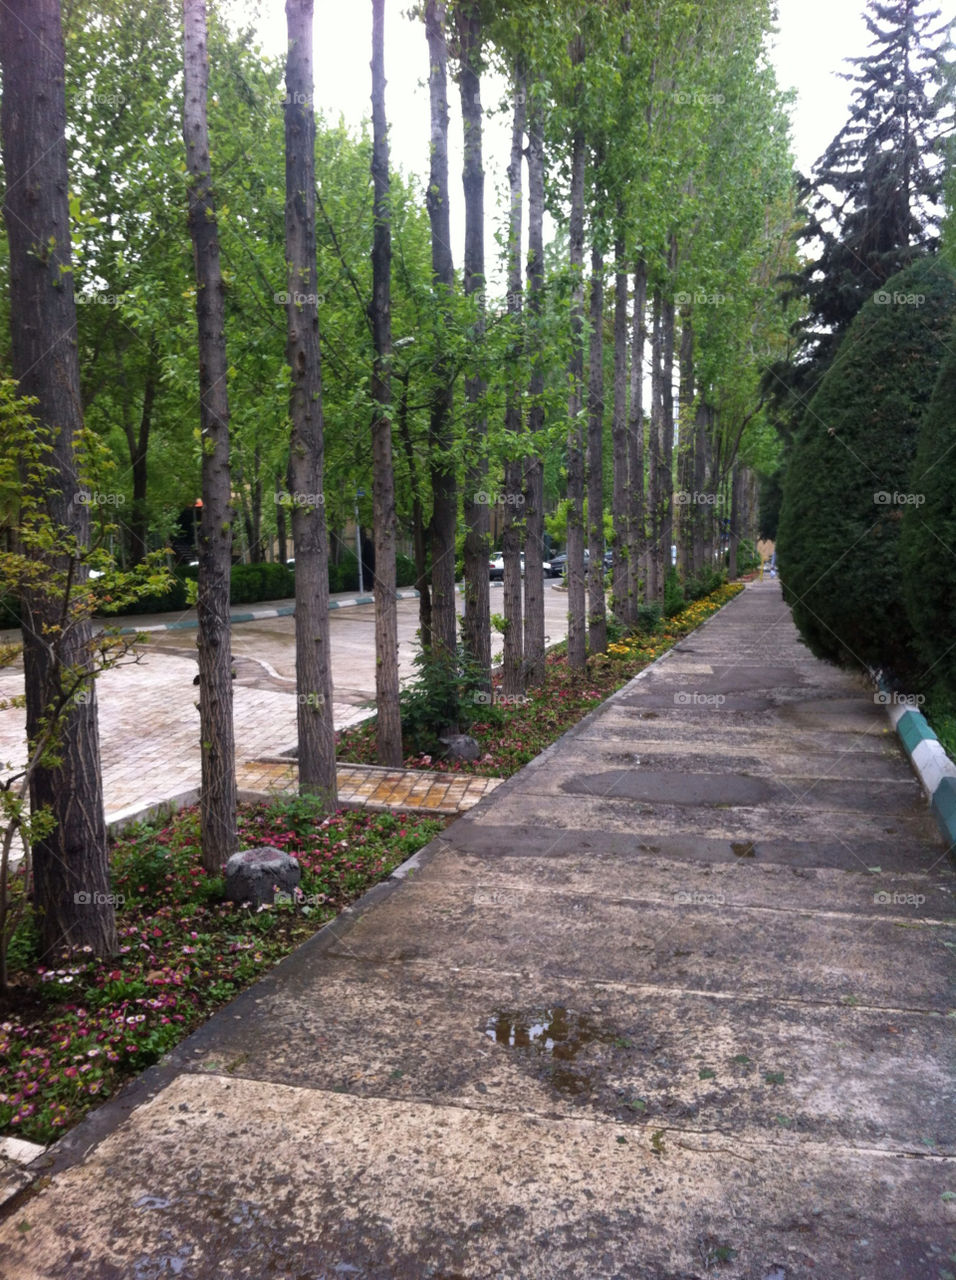 tarbiat modares university i have studied here garden pathway by alimasa1391